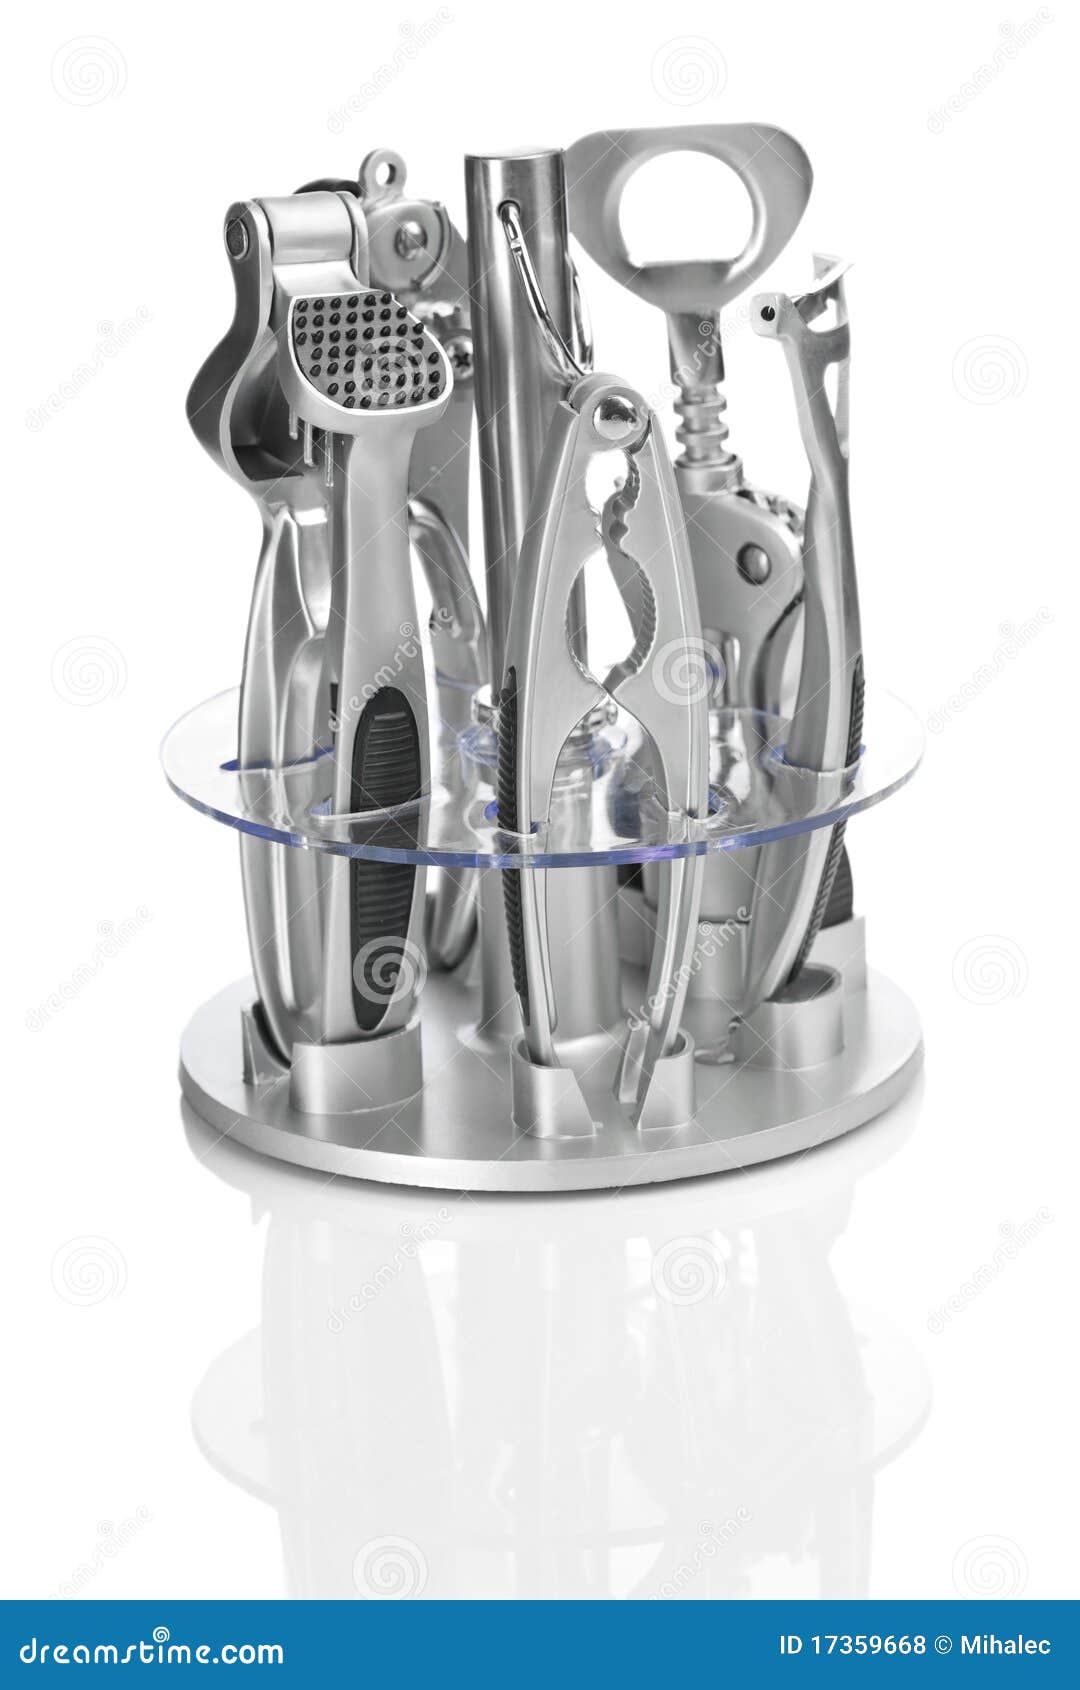 Set of kitchen utensils isolated on white background.